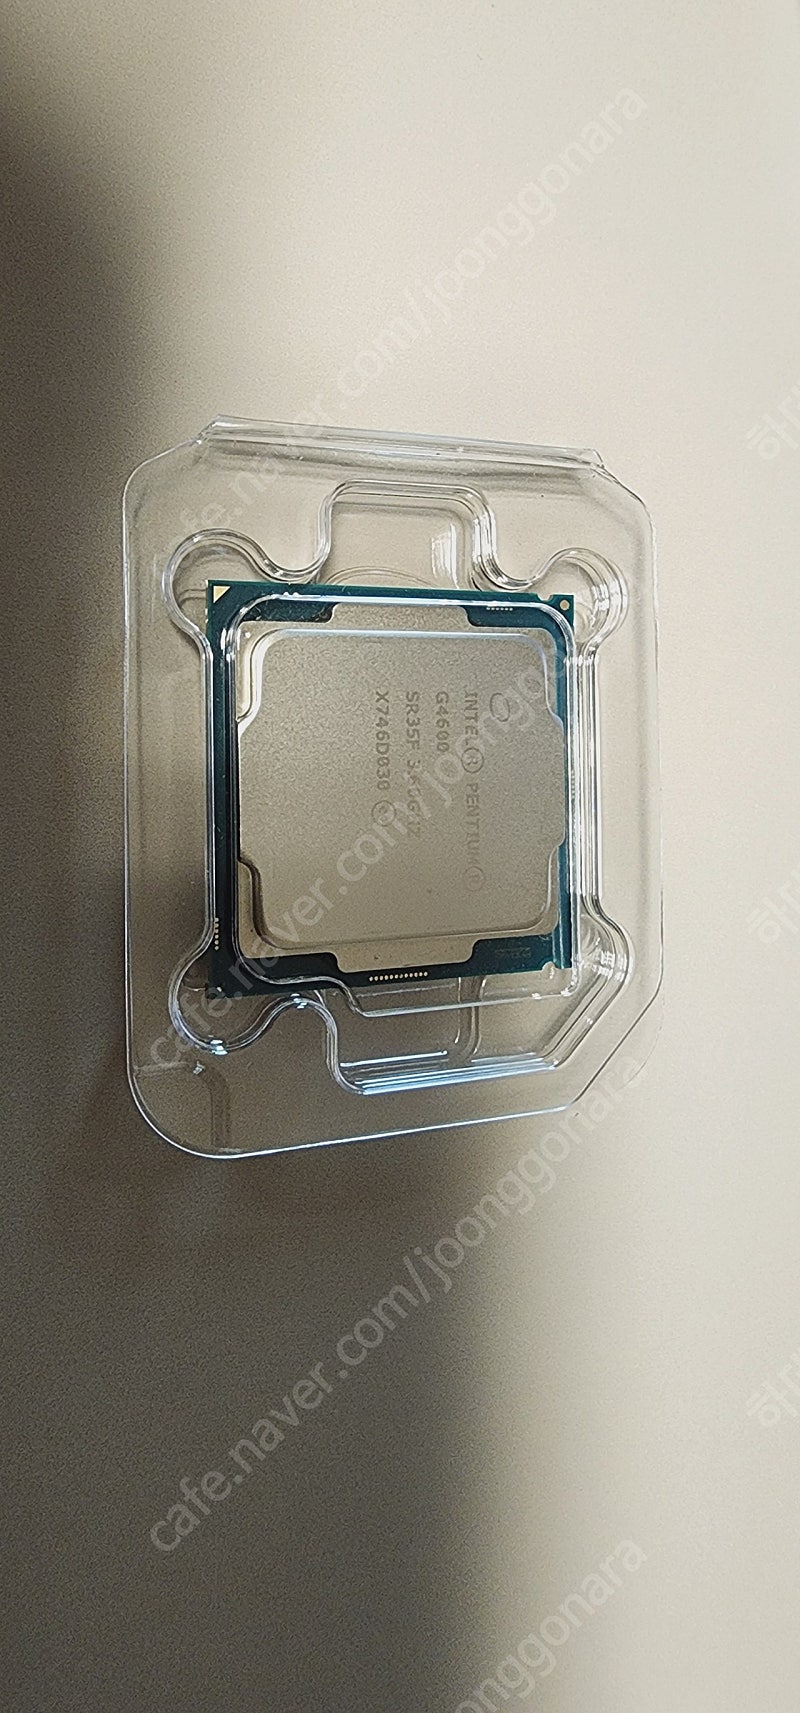 intel G4600, 삼성 DDR4 4gb 2400T 노트북용 메모리 2개